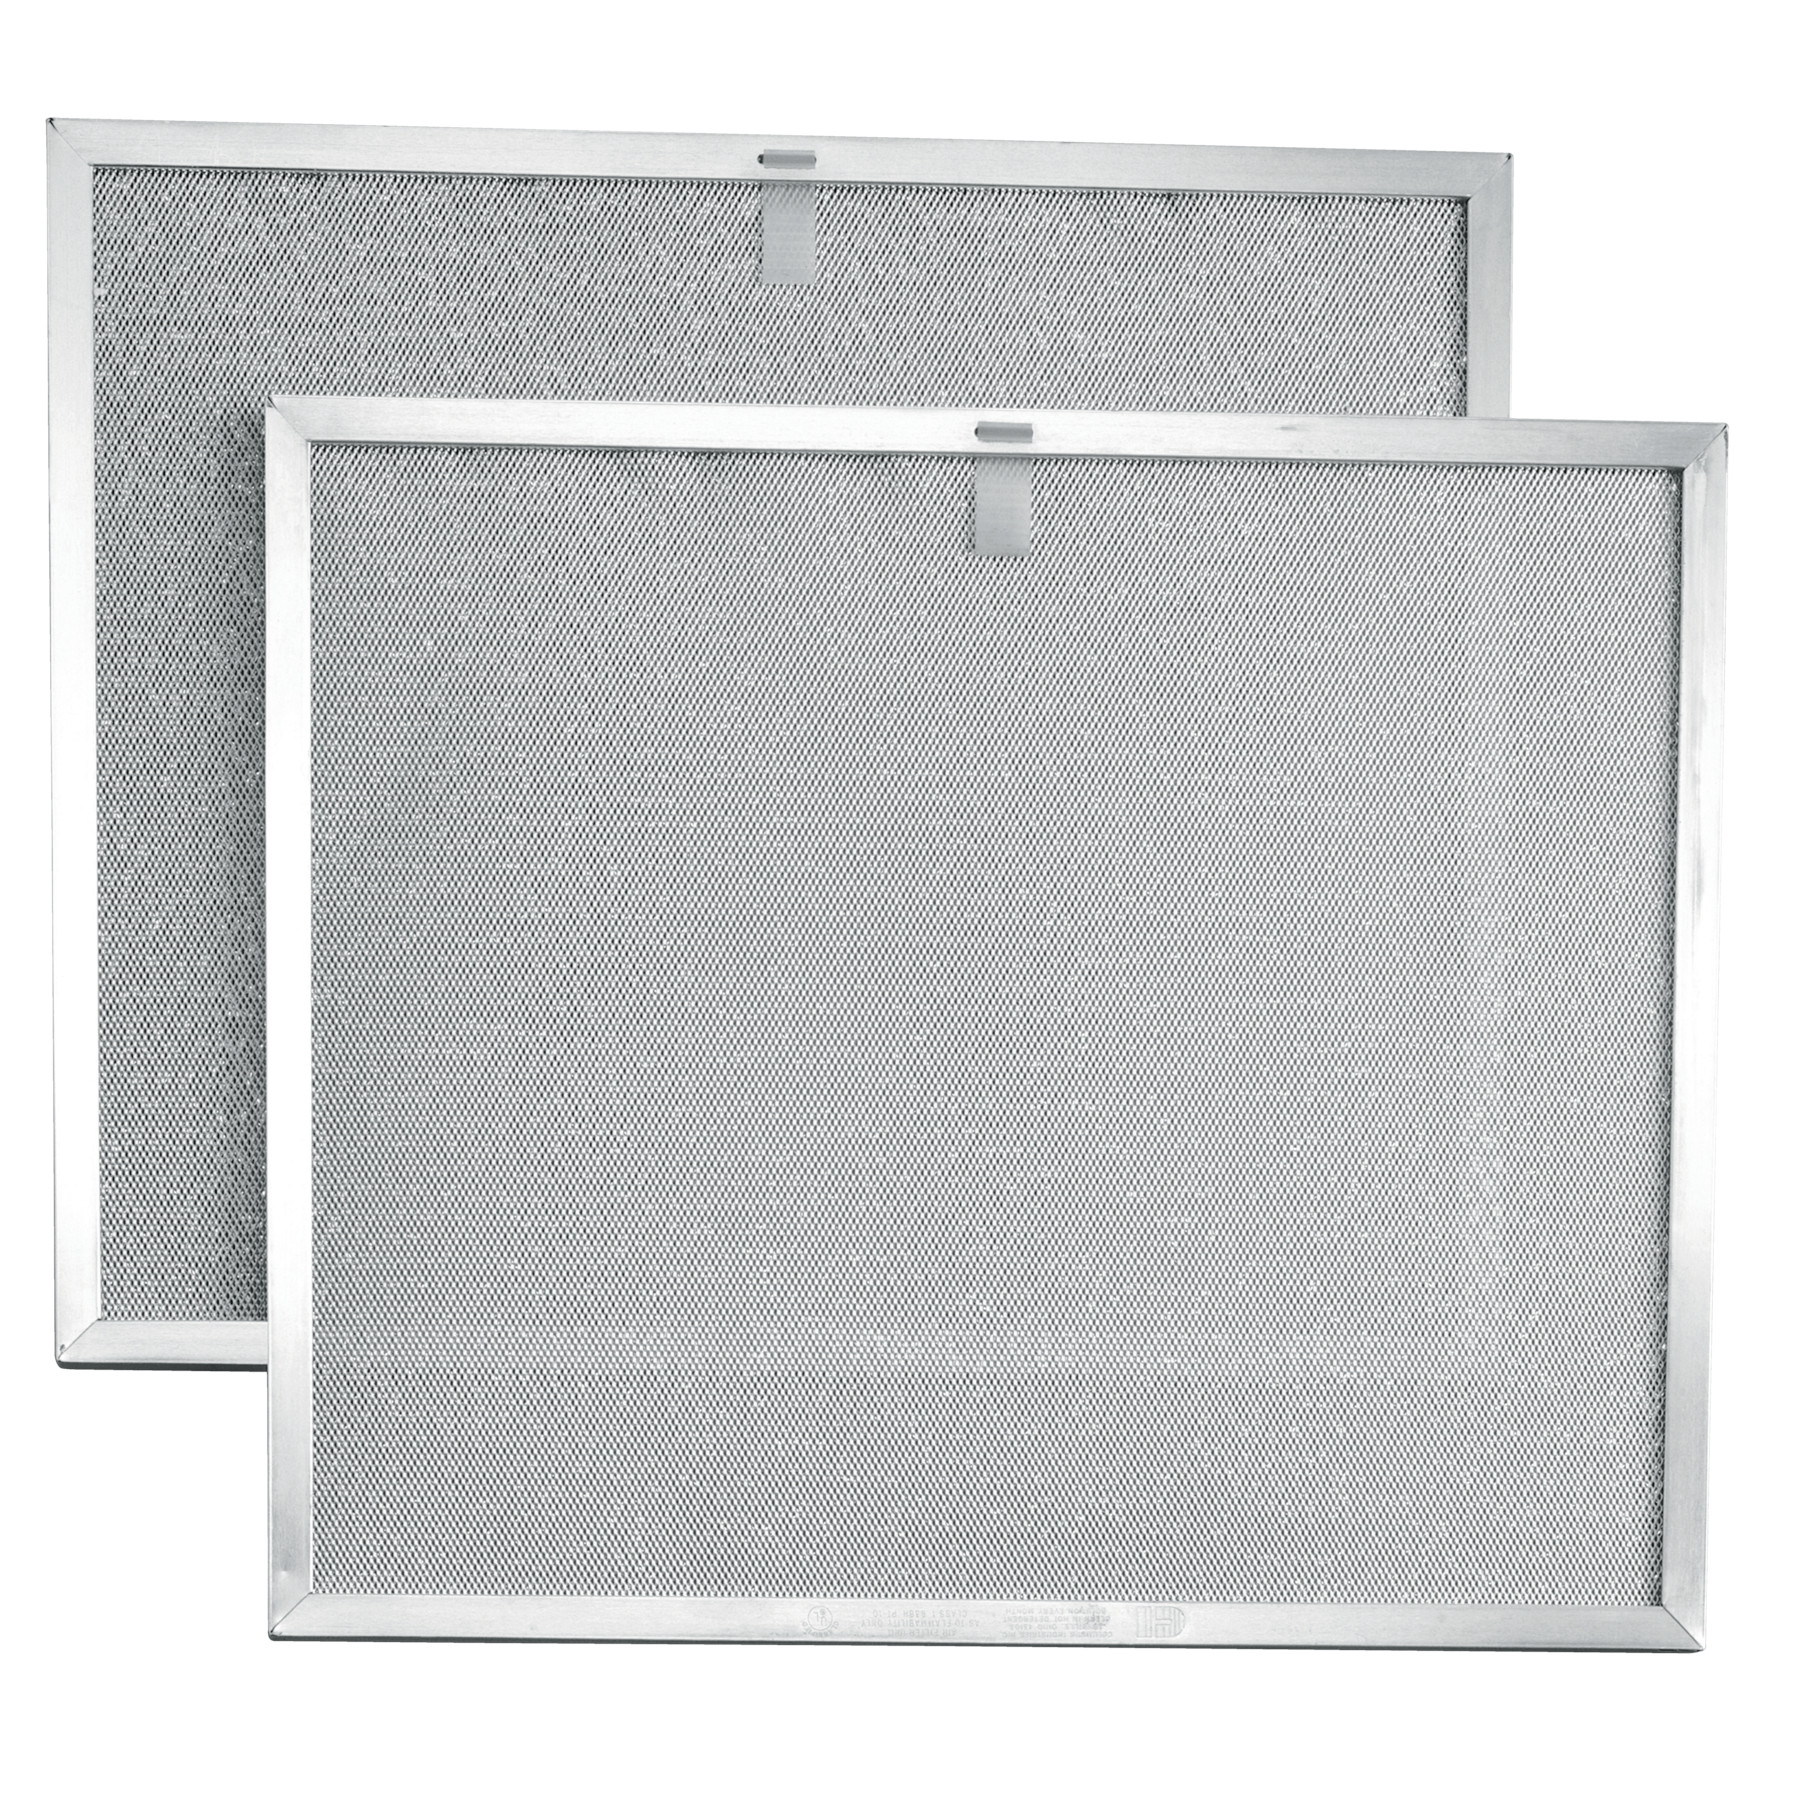 Aluminum Filter for 30-Inch wide QS2 Series Range Hood